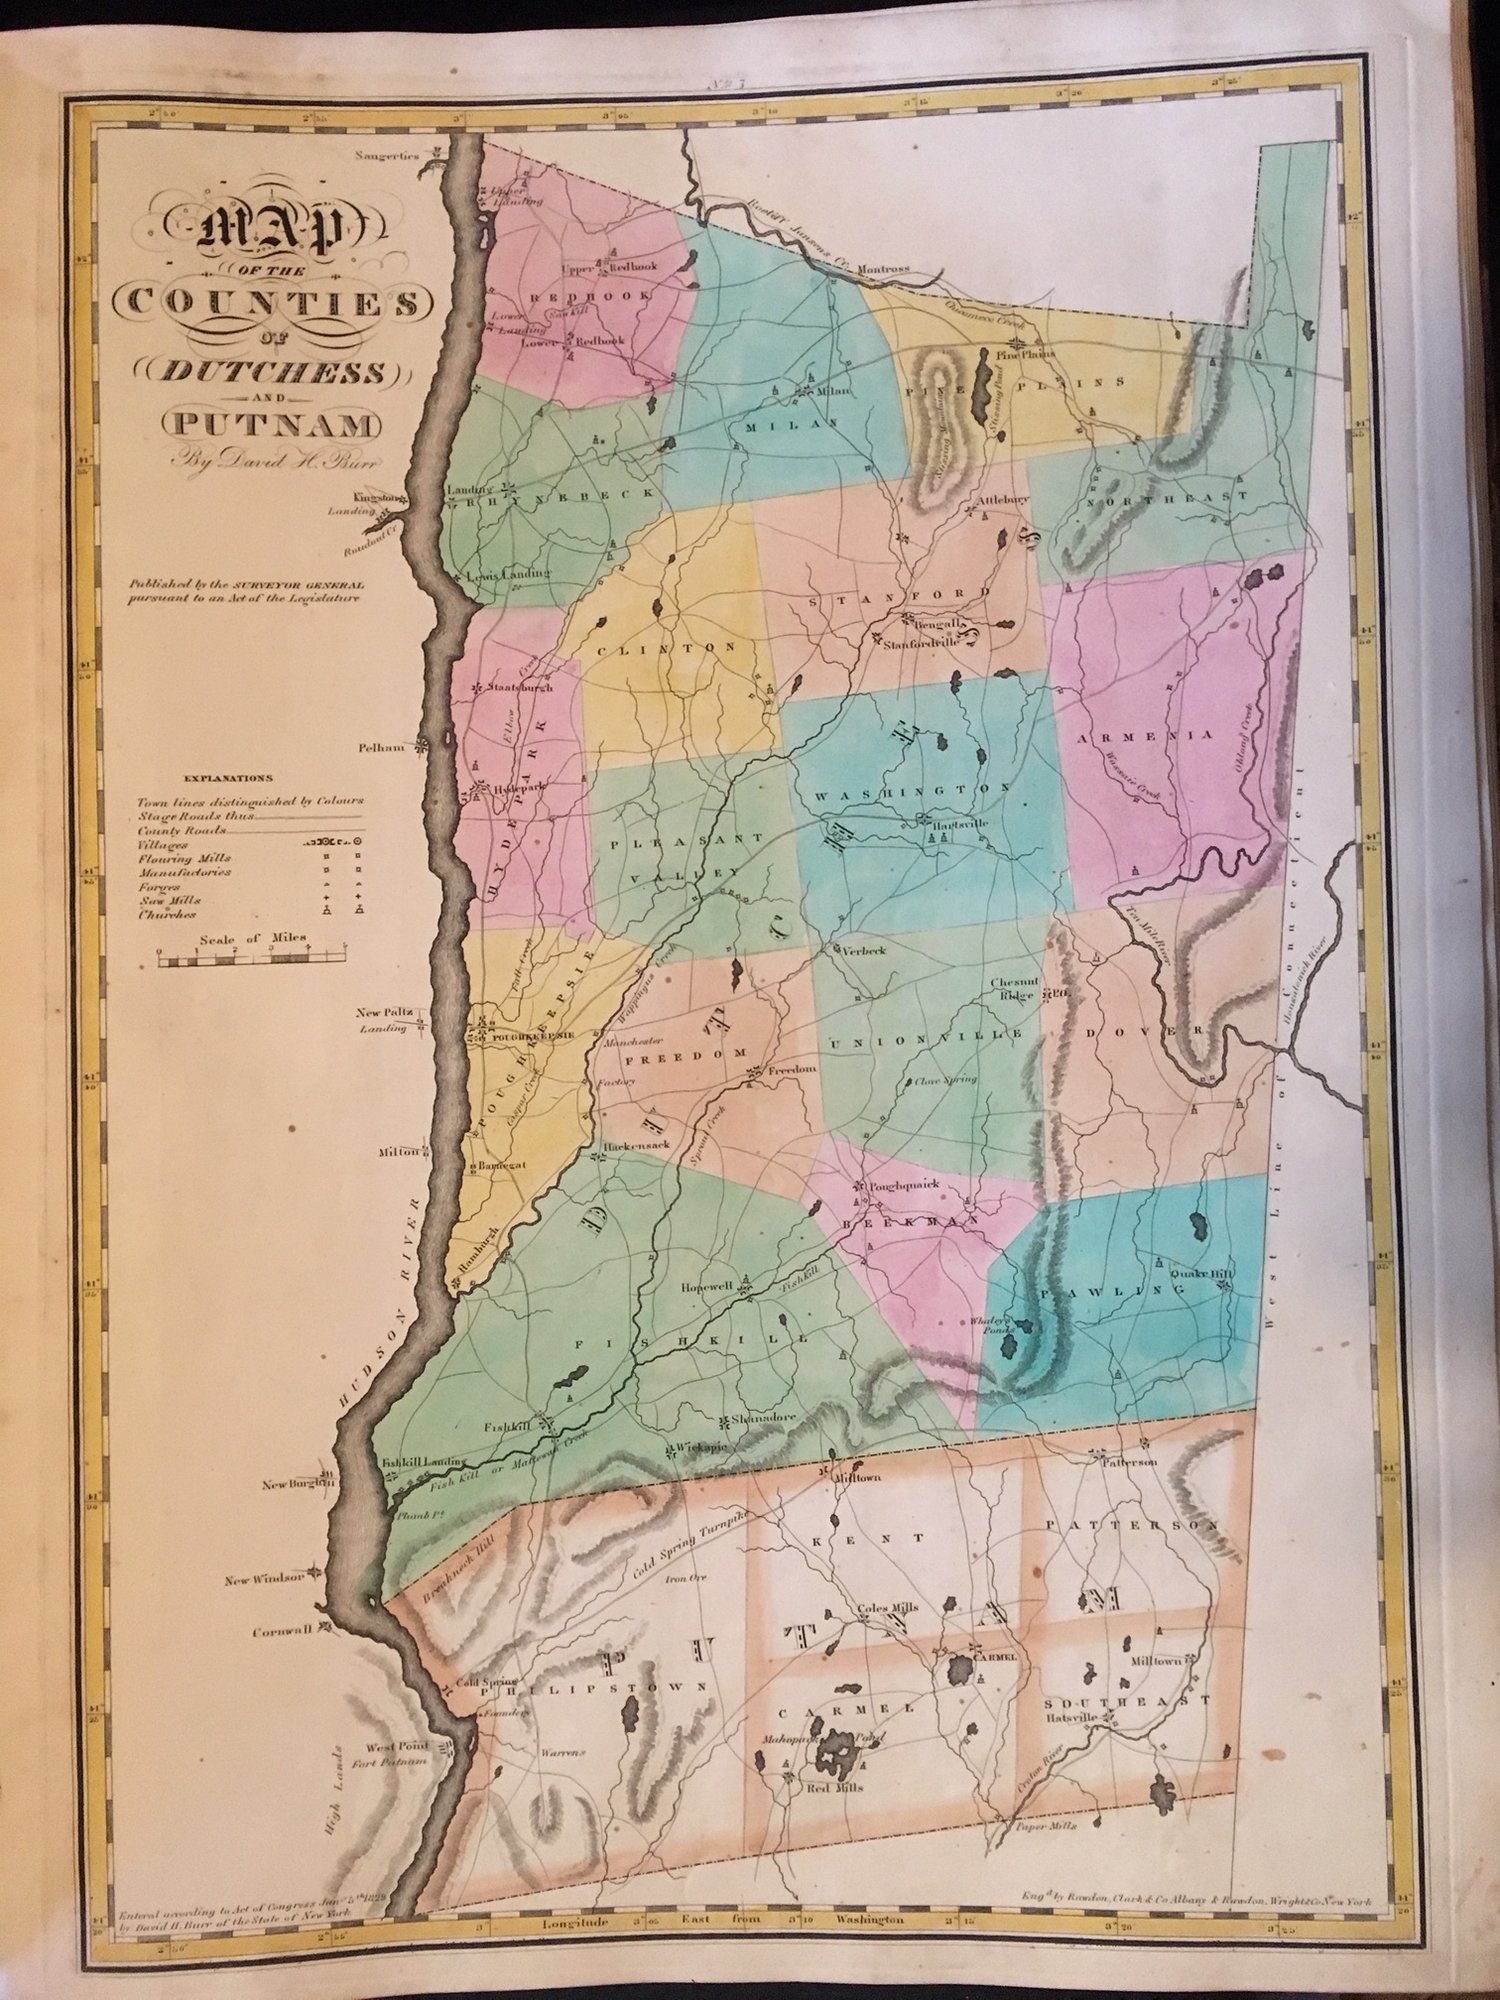 New York Burr 1835-27.94 x 23